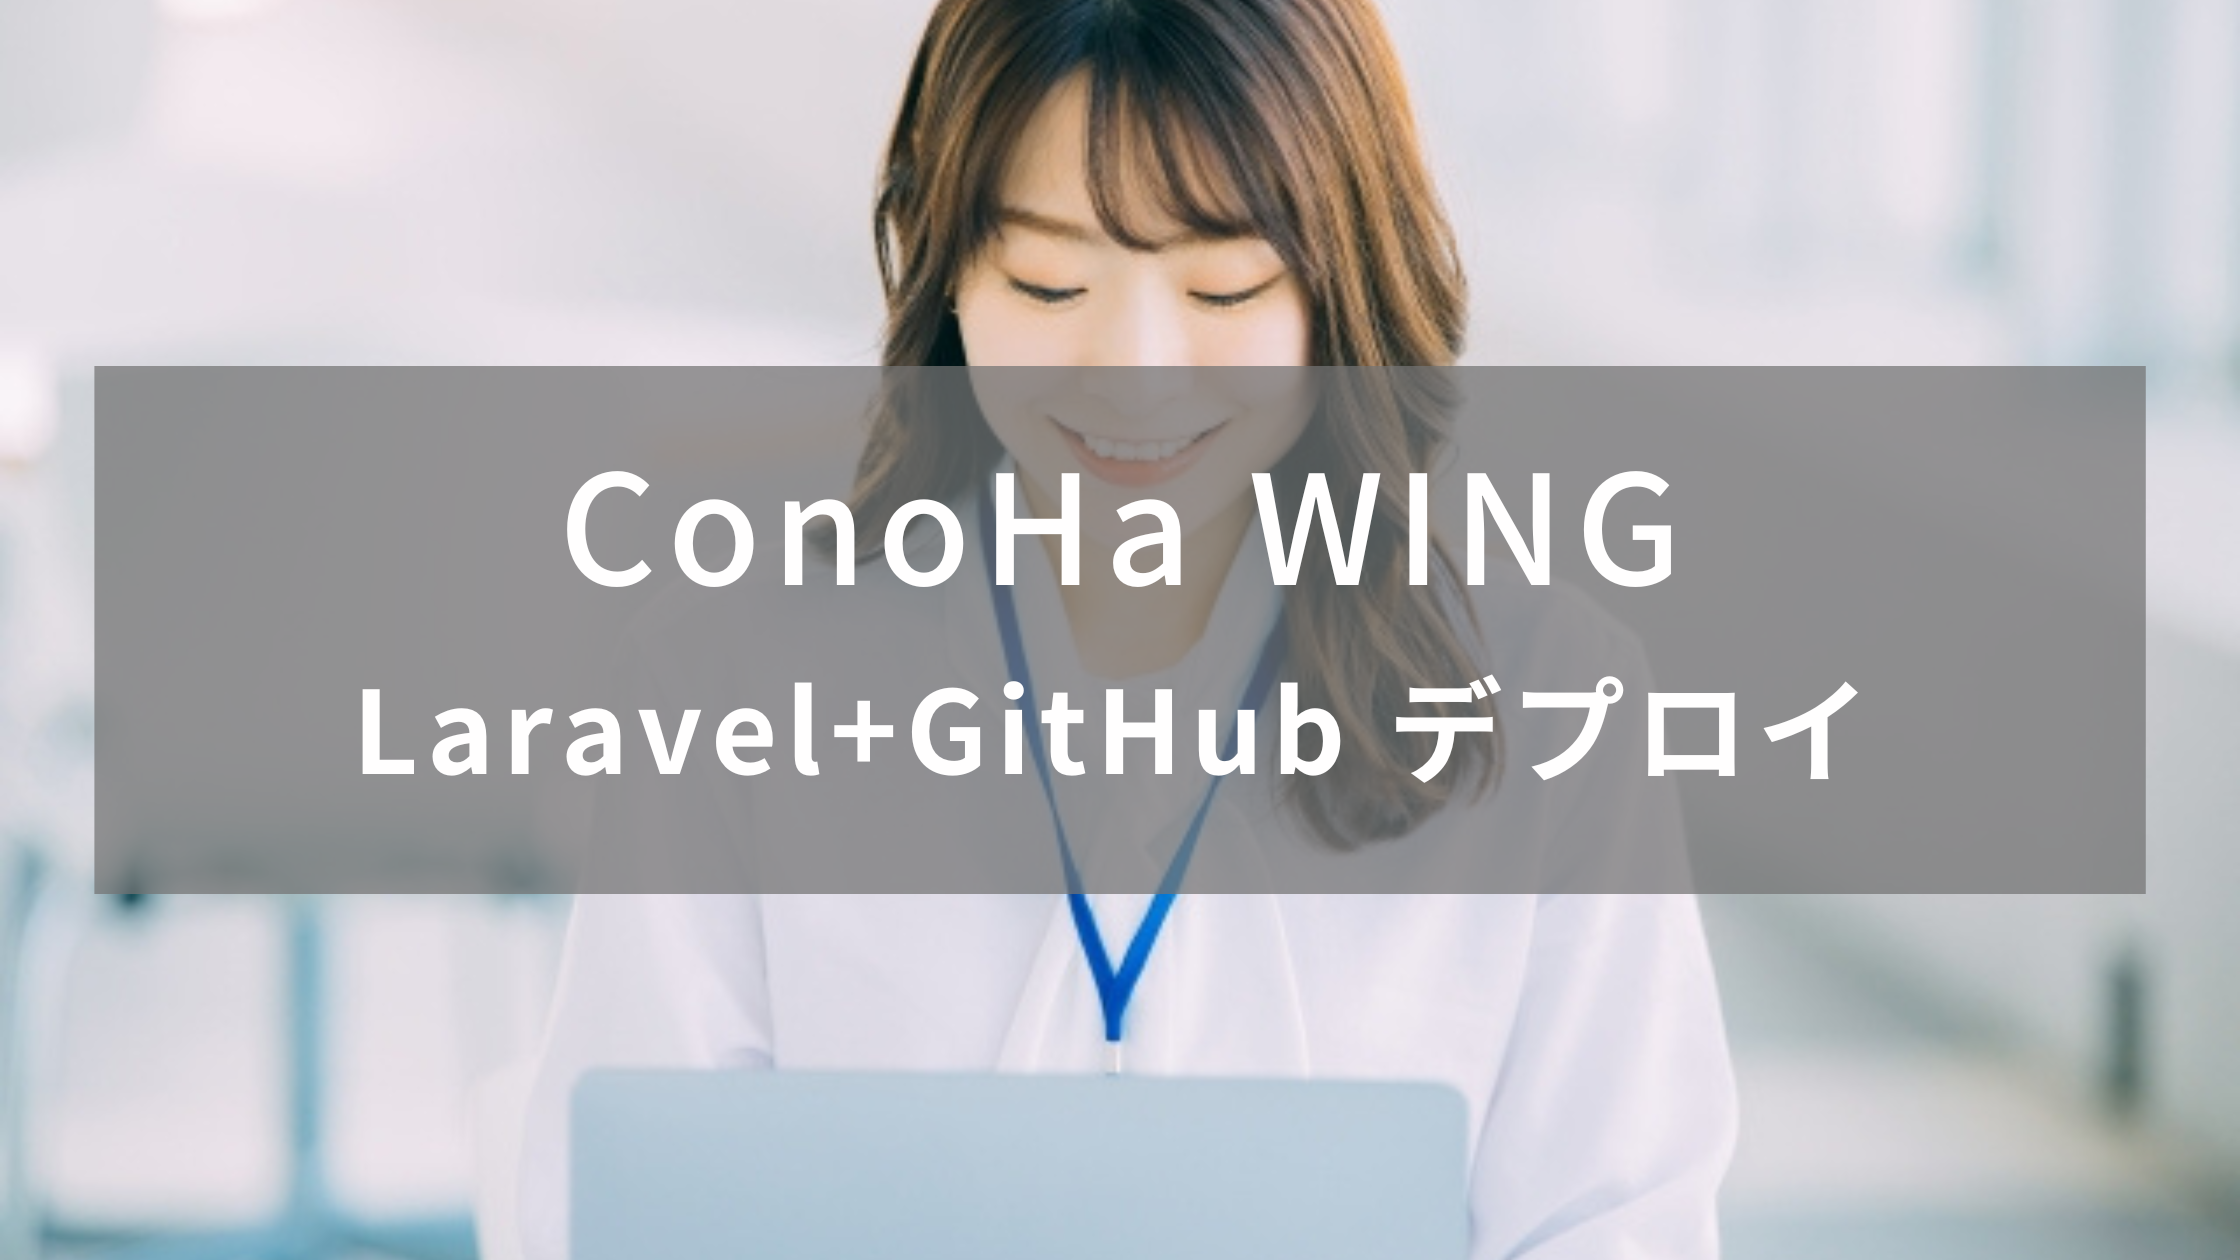 【ConoHa WING】LaravelをGitHubからデプロイして公開